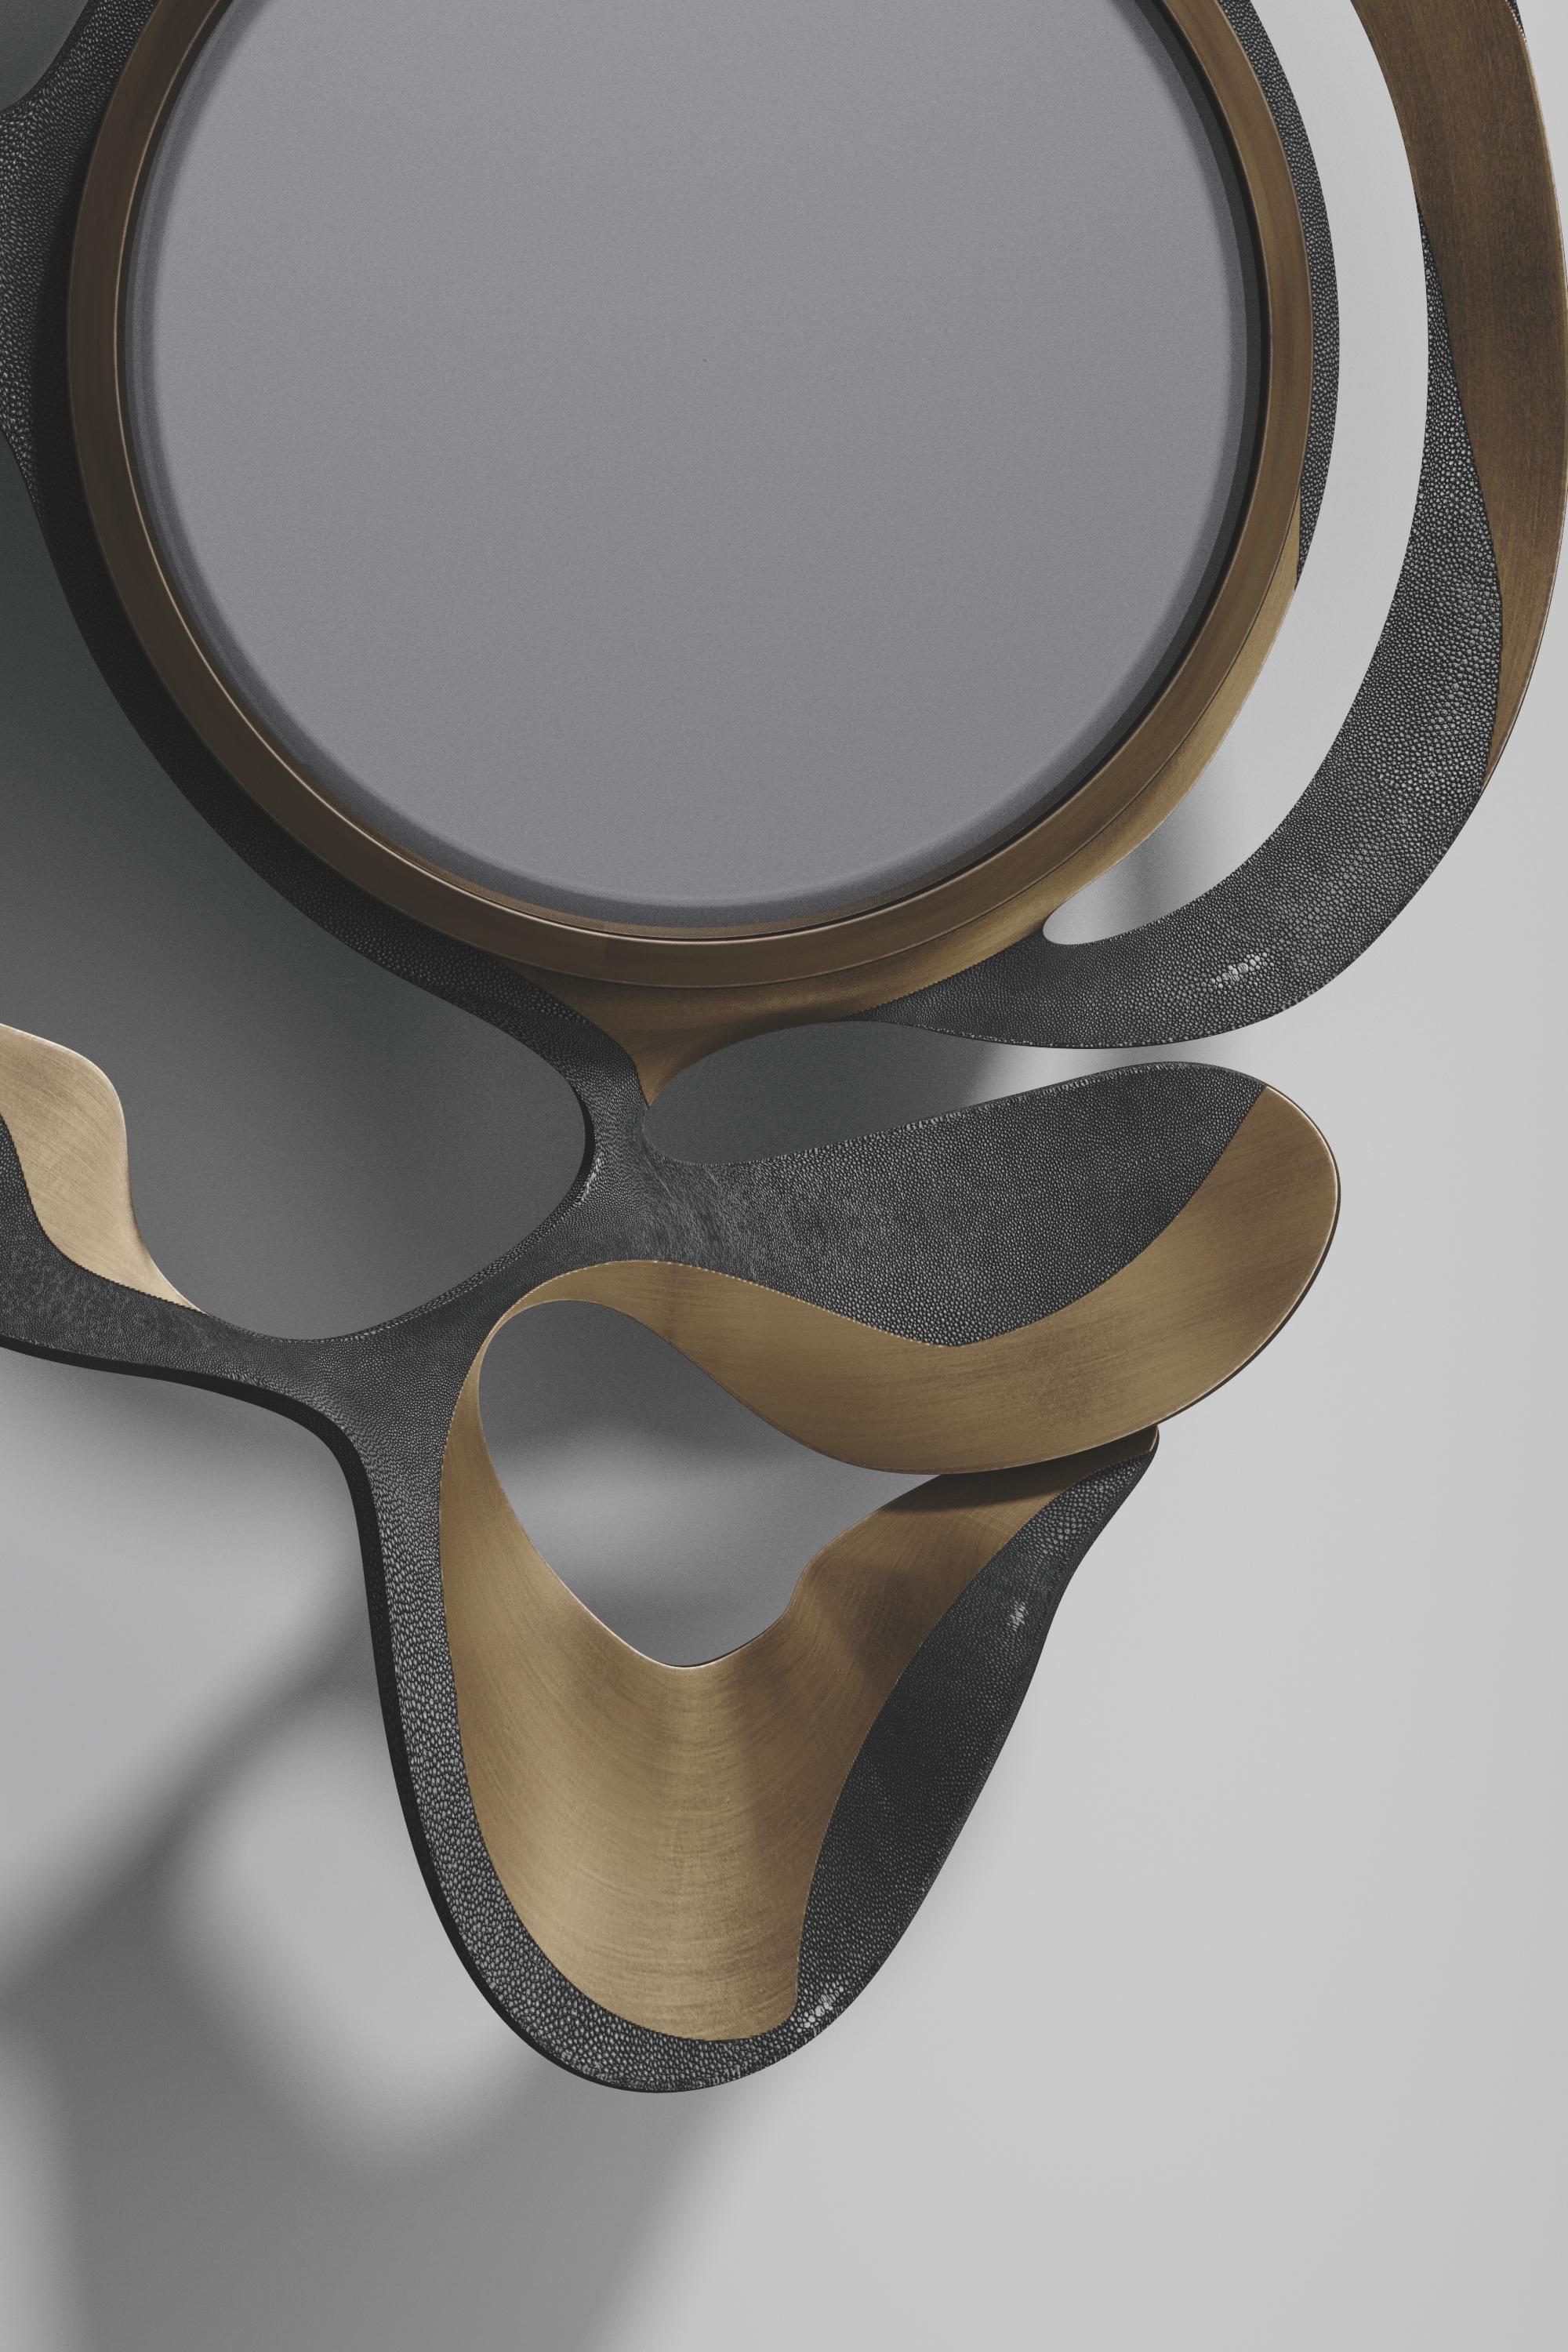  Bronze Patina Brass Inlaid Mirror by Kifu Paris For Sale 2